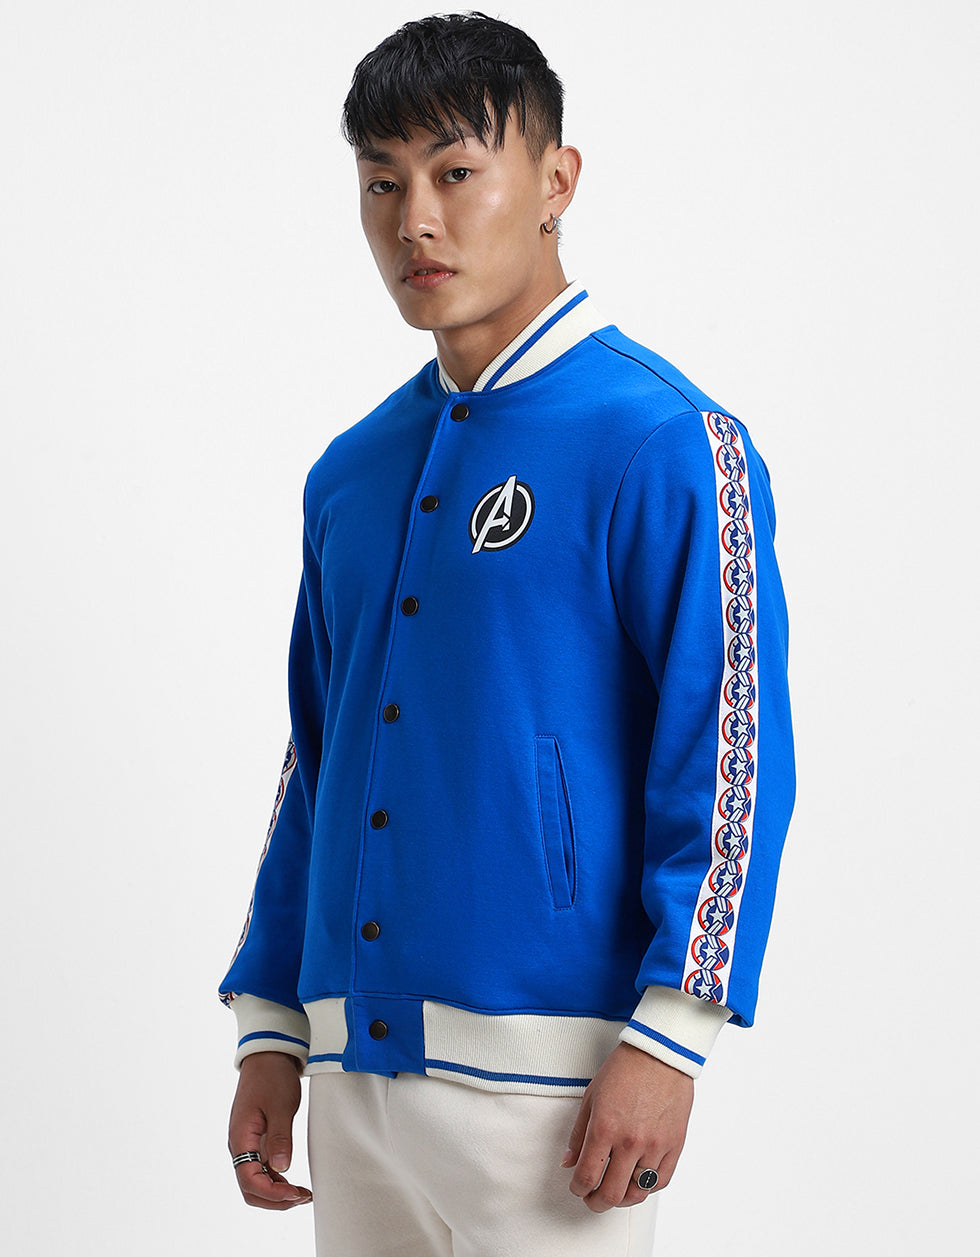 Vibrant BLUE Jacket - Stay Stylish and Warm! Veirdo